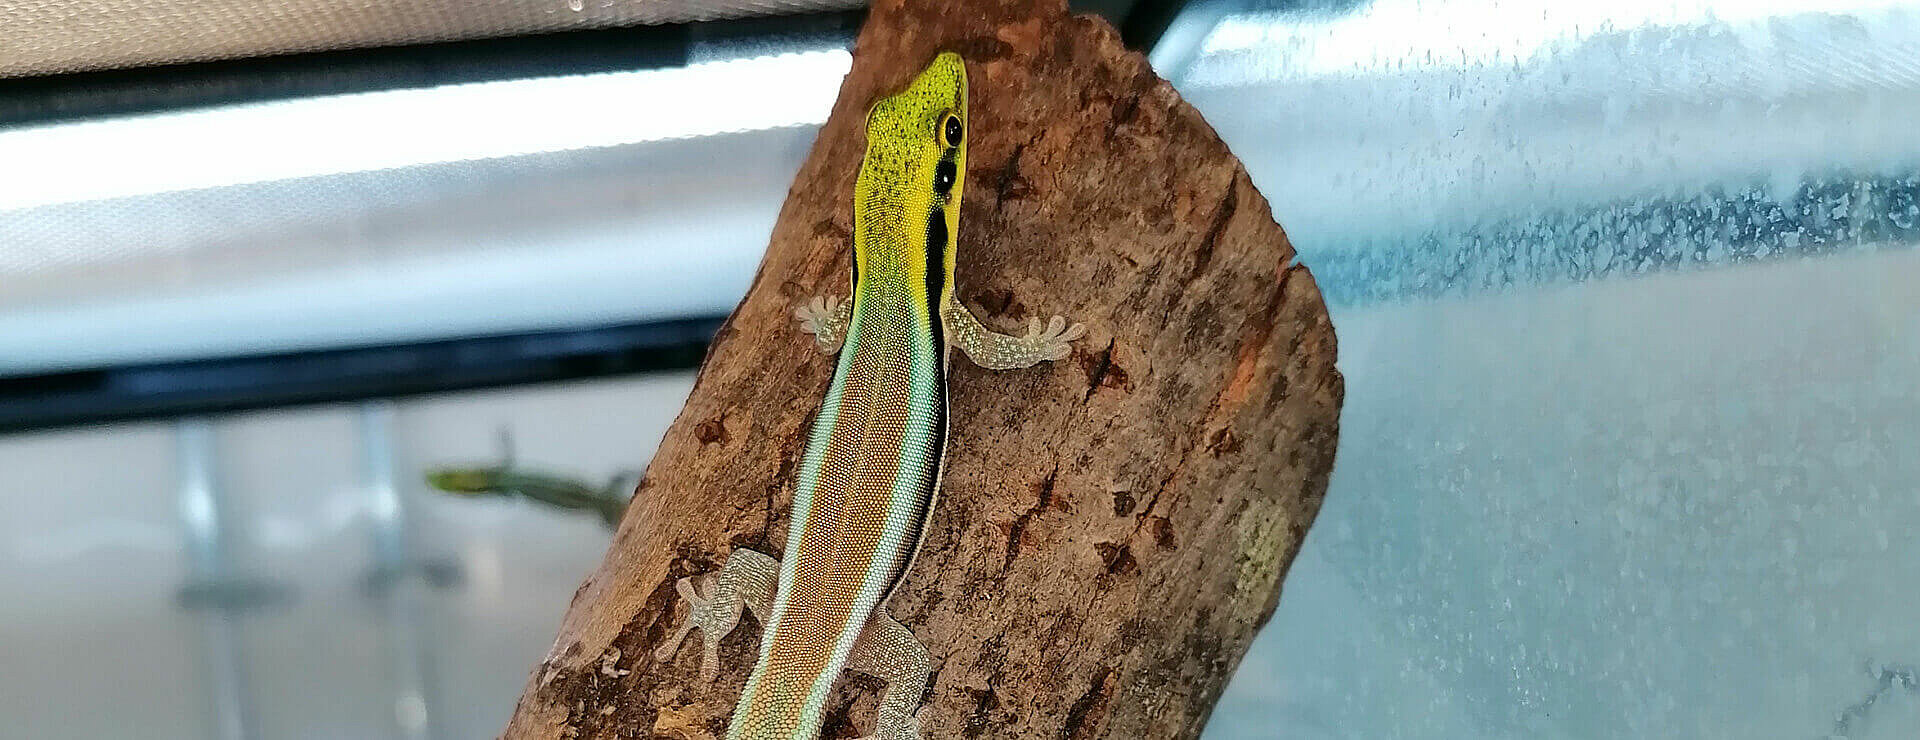 Yellow Headed Day Gecko